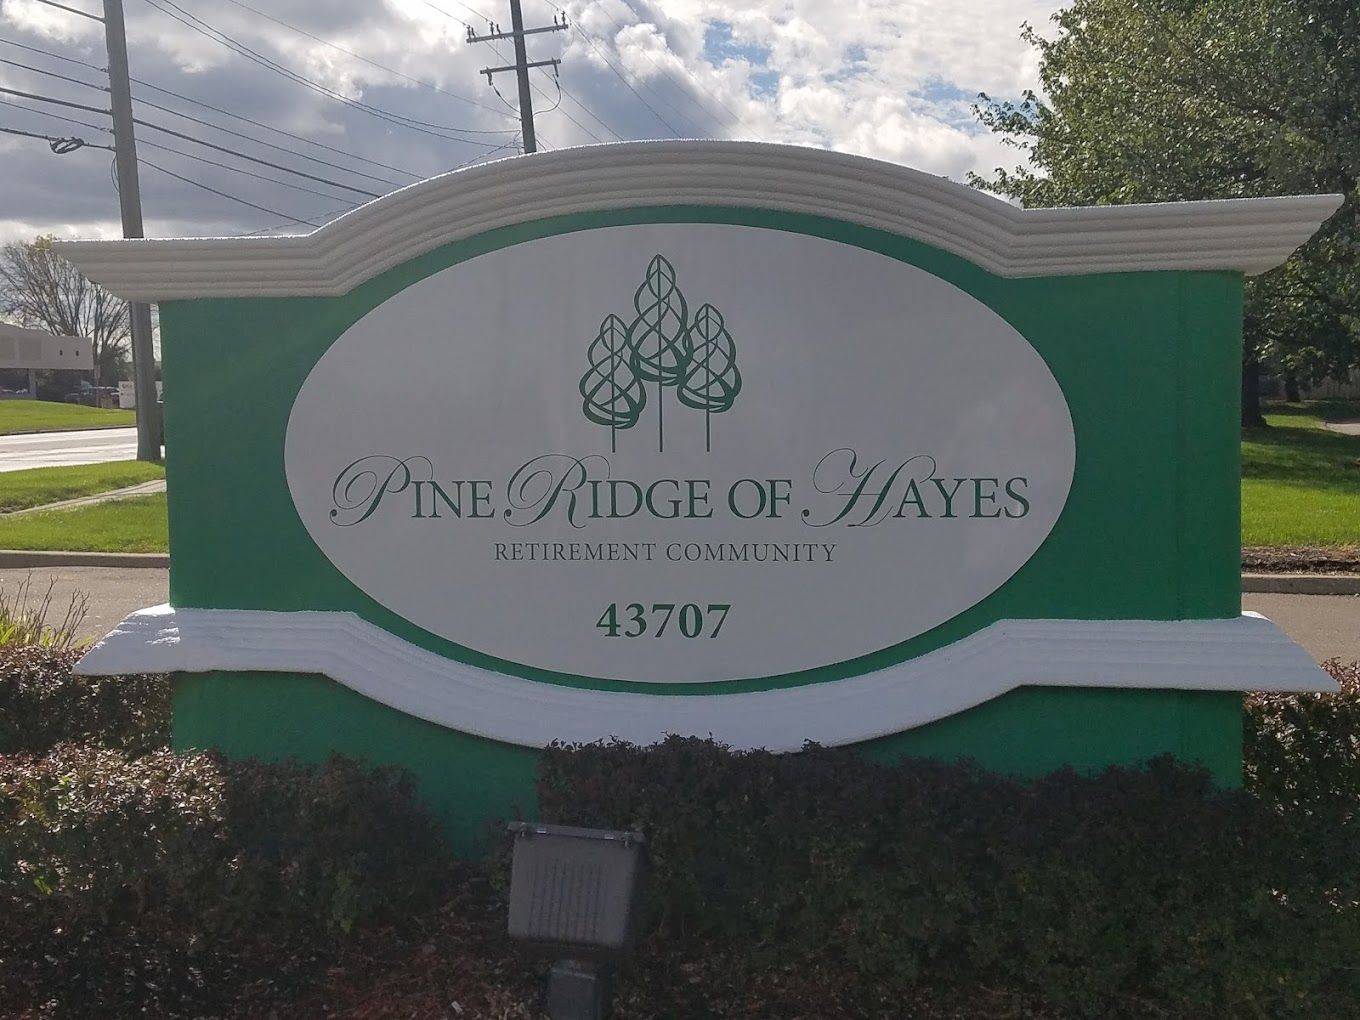 Pine Ridge of Hayes 5